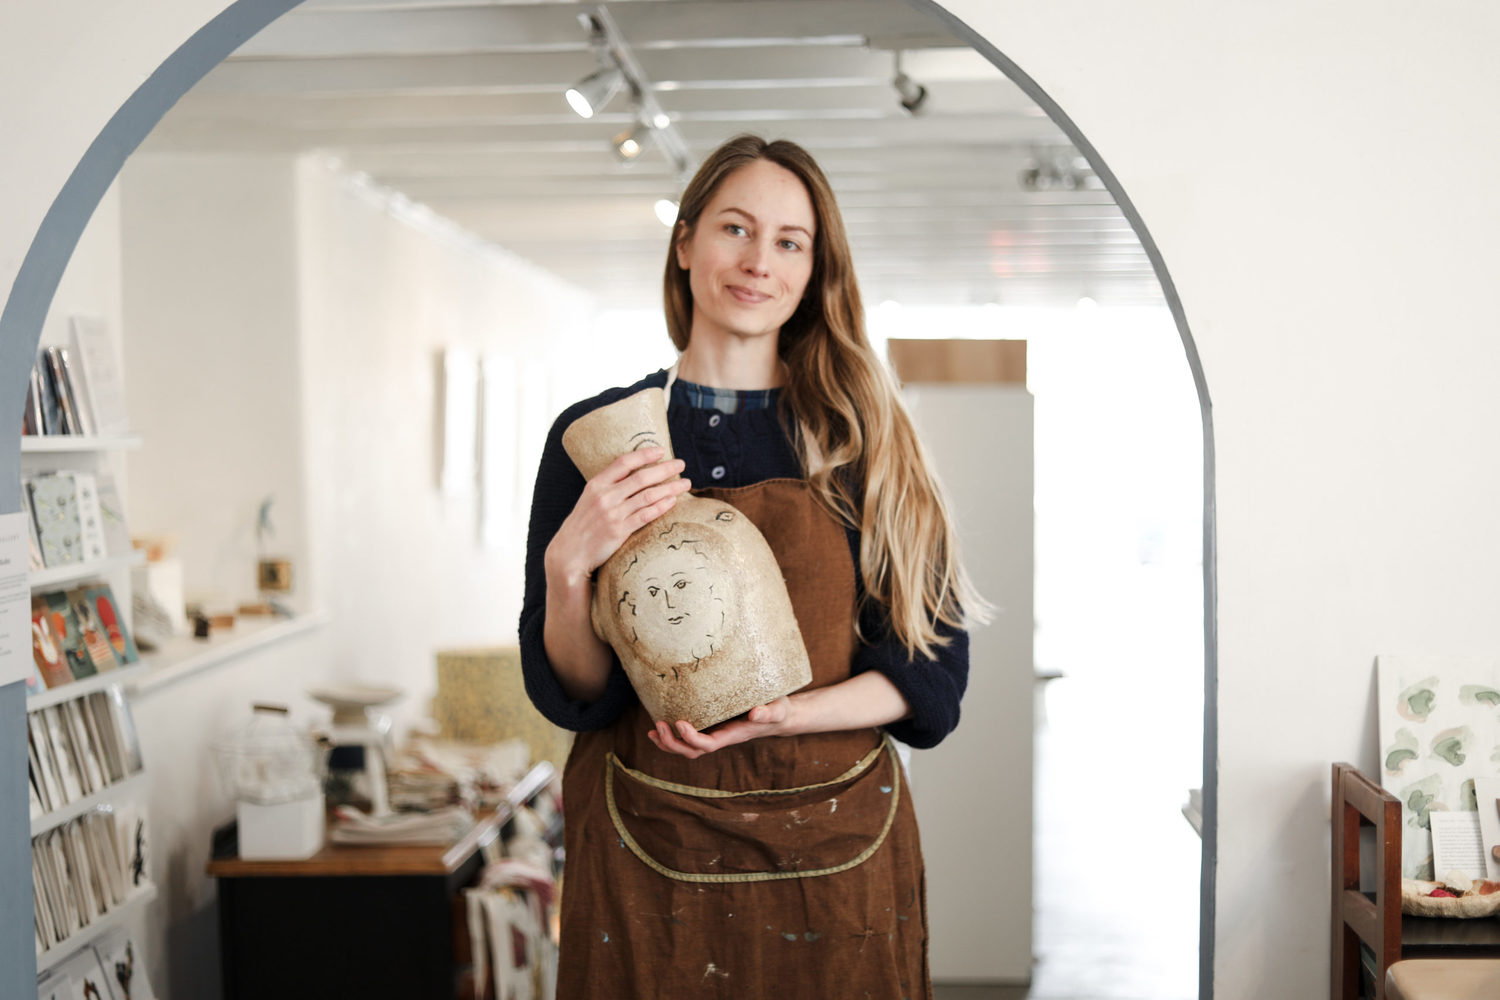 Charlotte Salt’s ceramics raise funds for the Trust